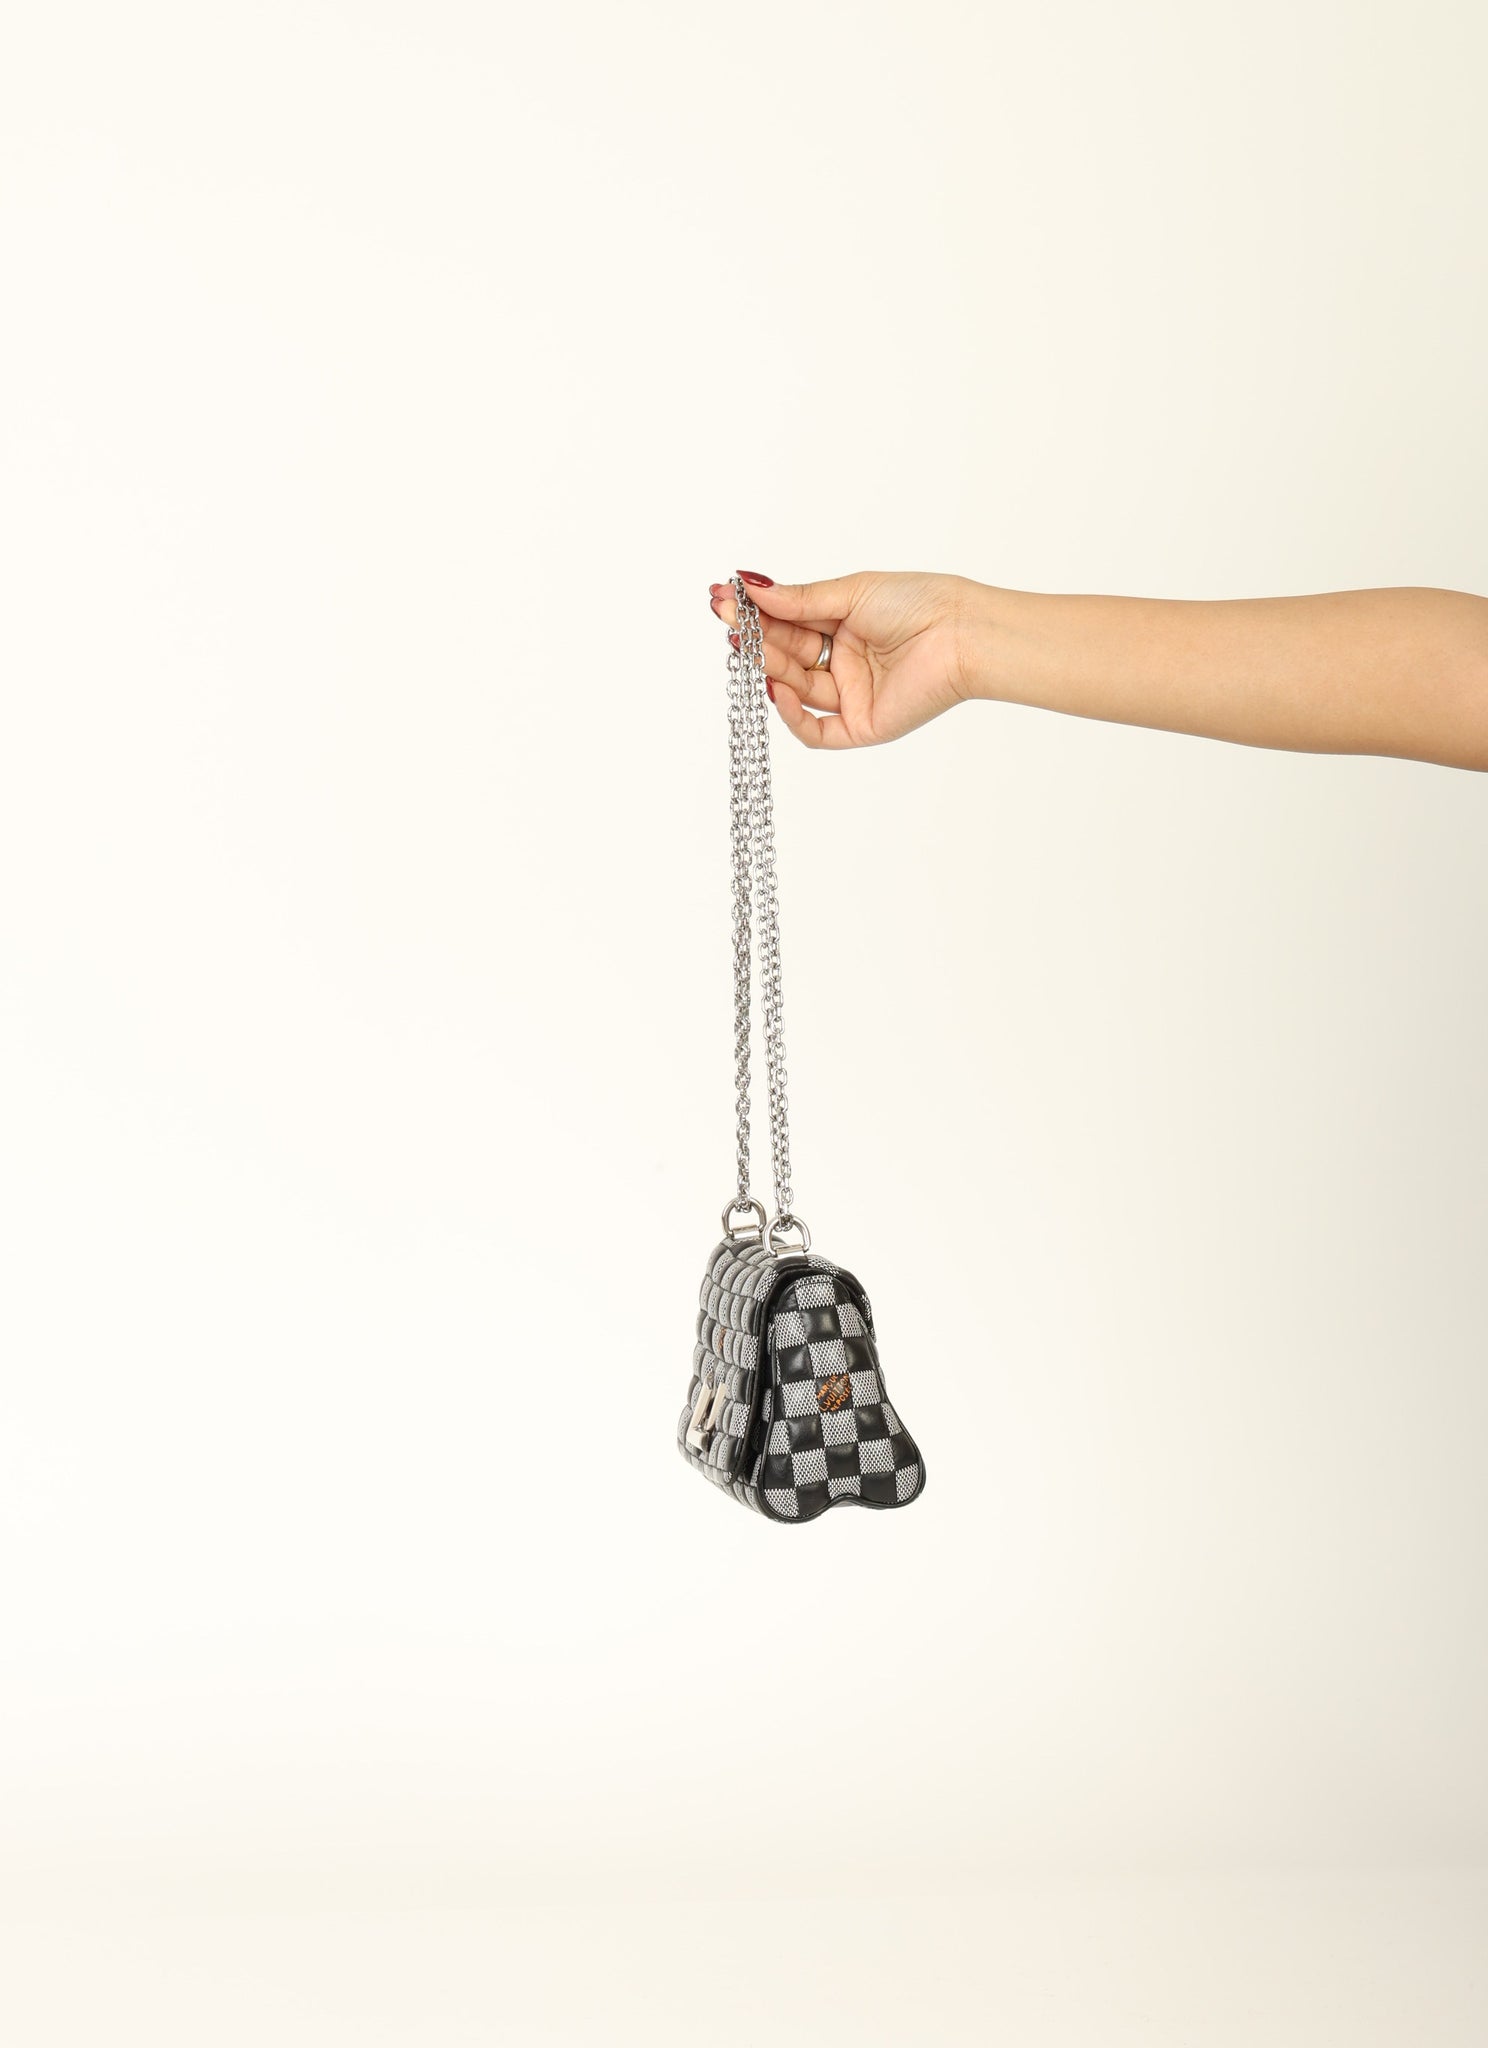 Louis Vuitton Twist Damier Mini Bag